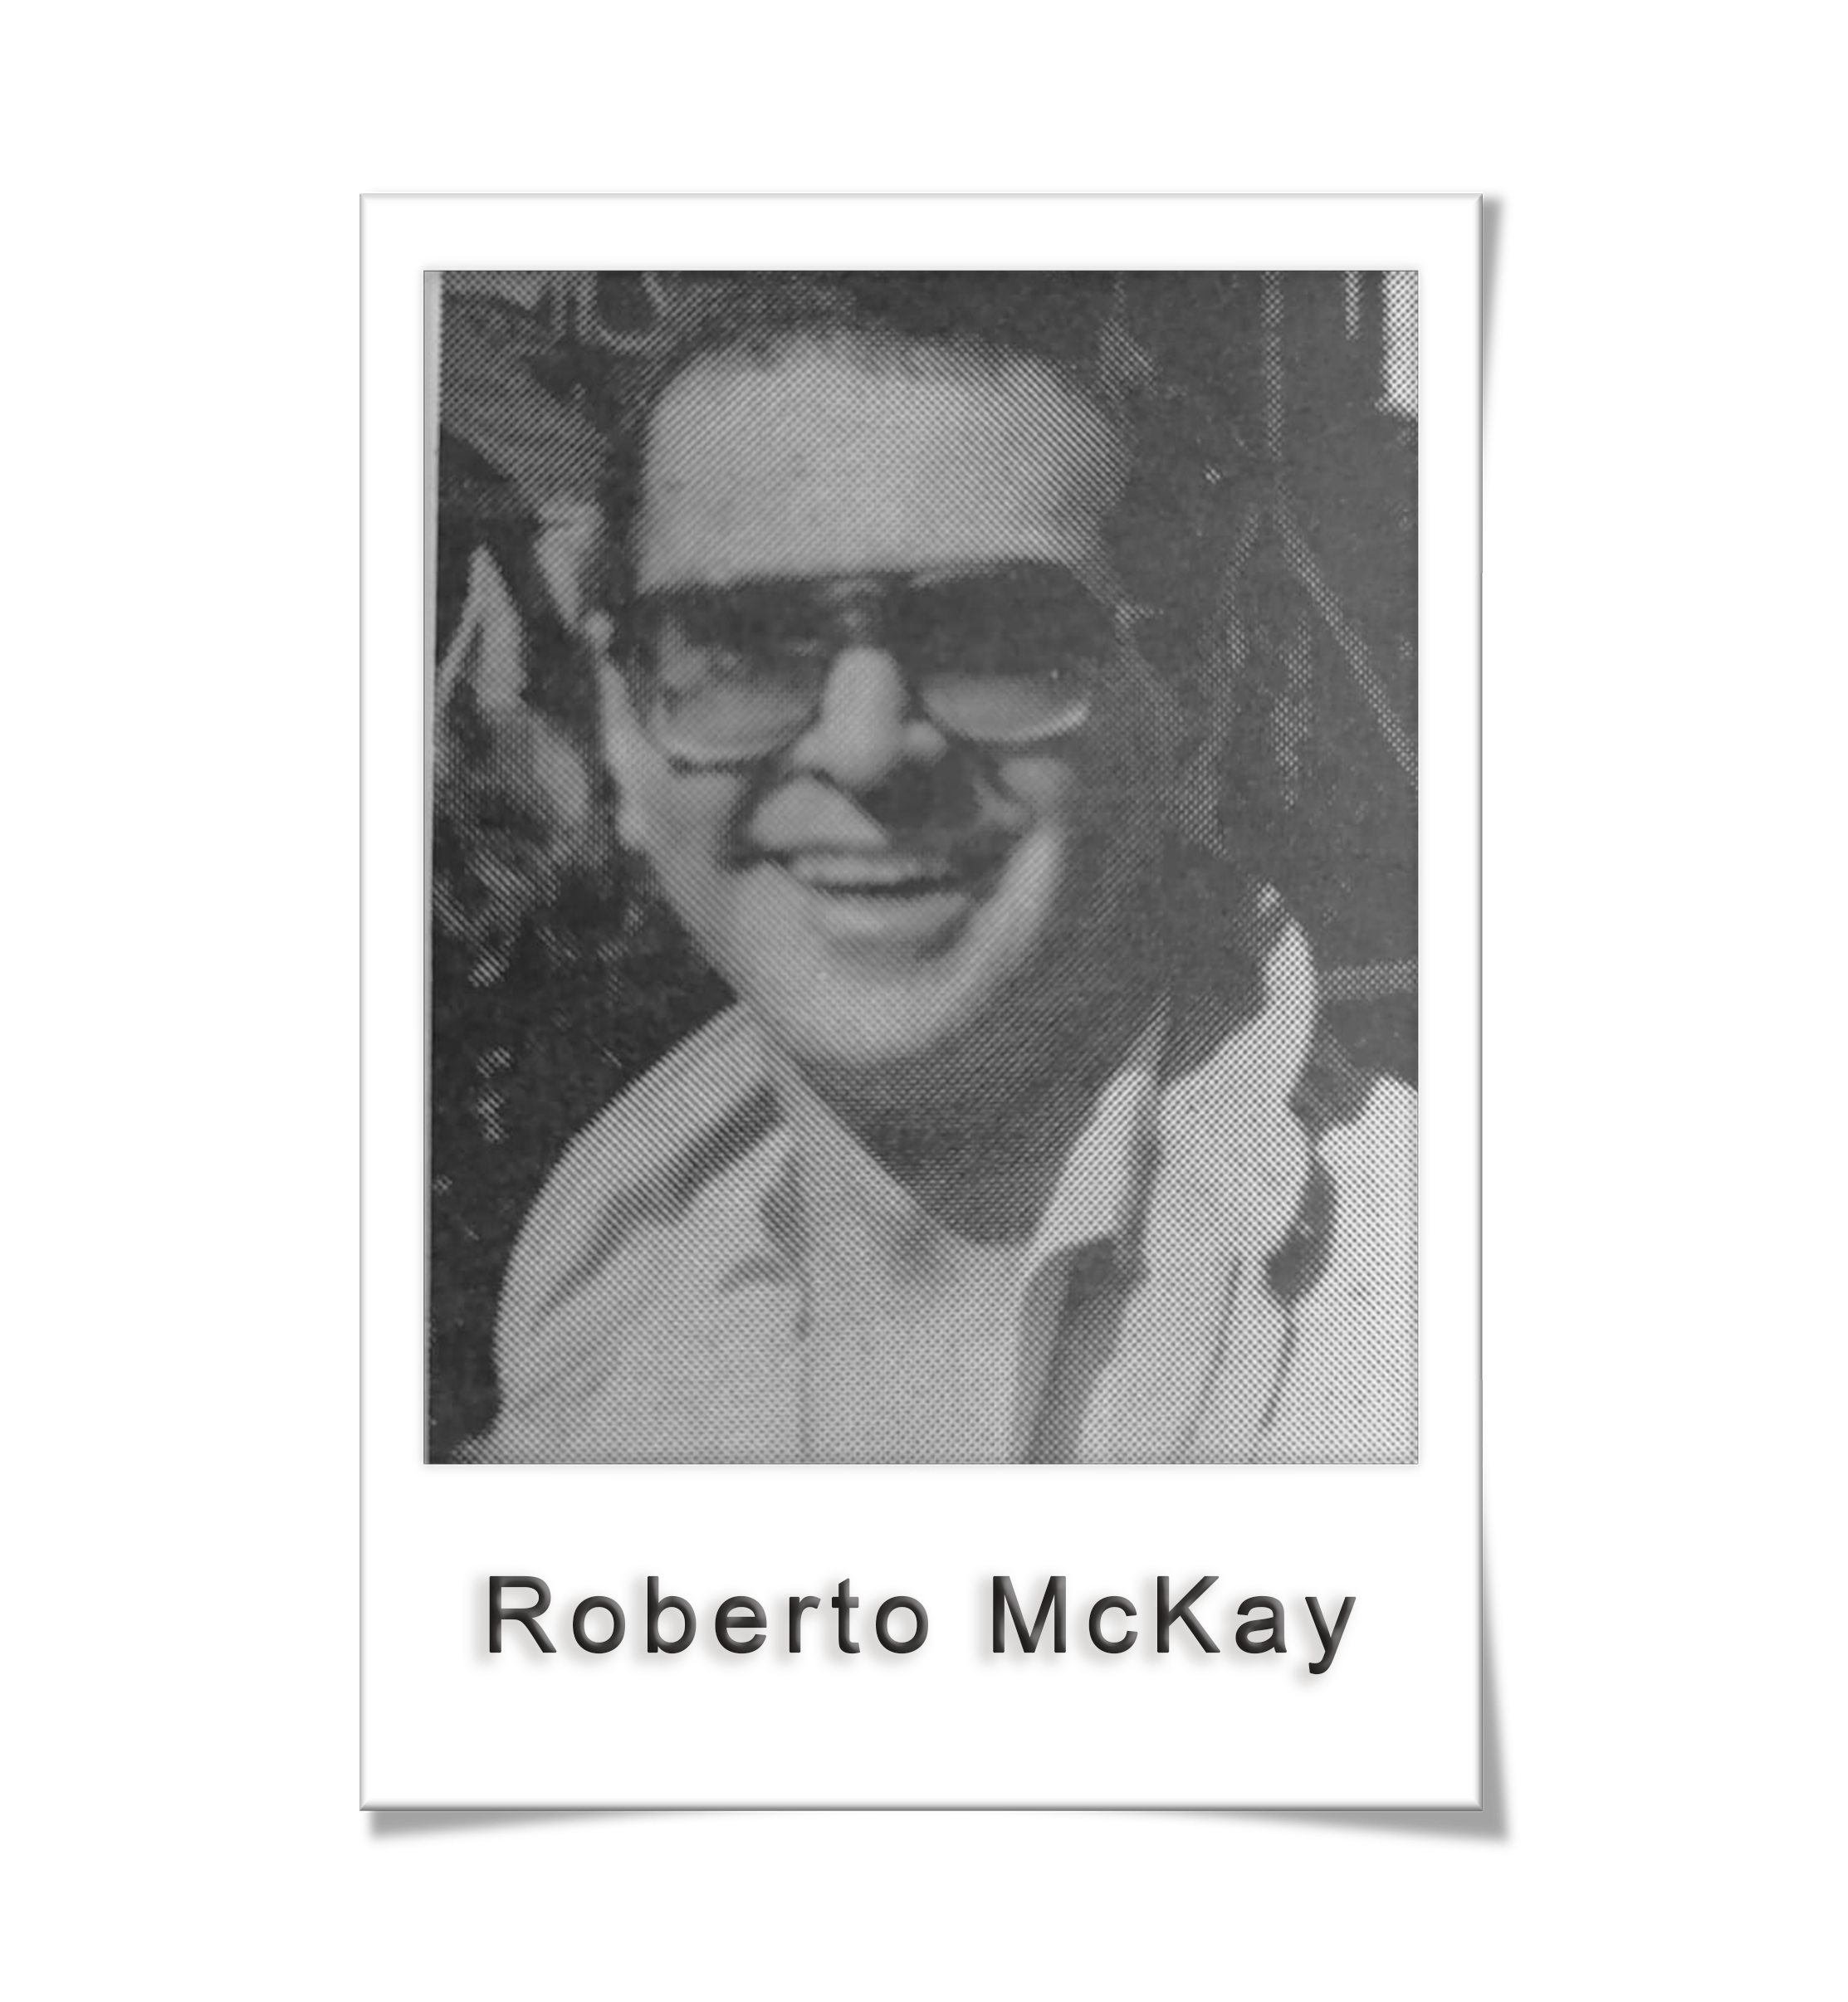 Roberto McKay